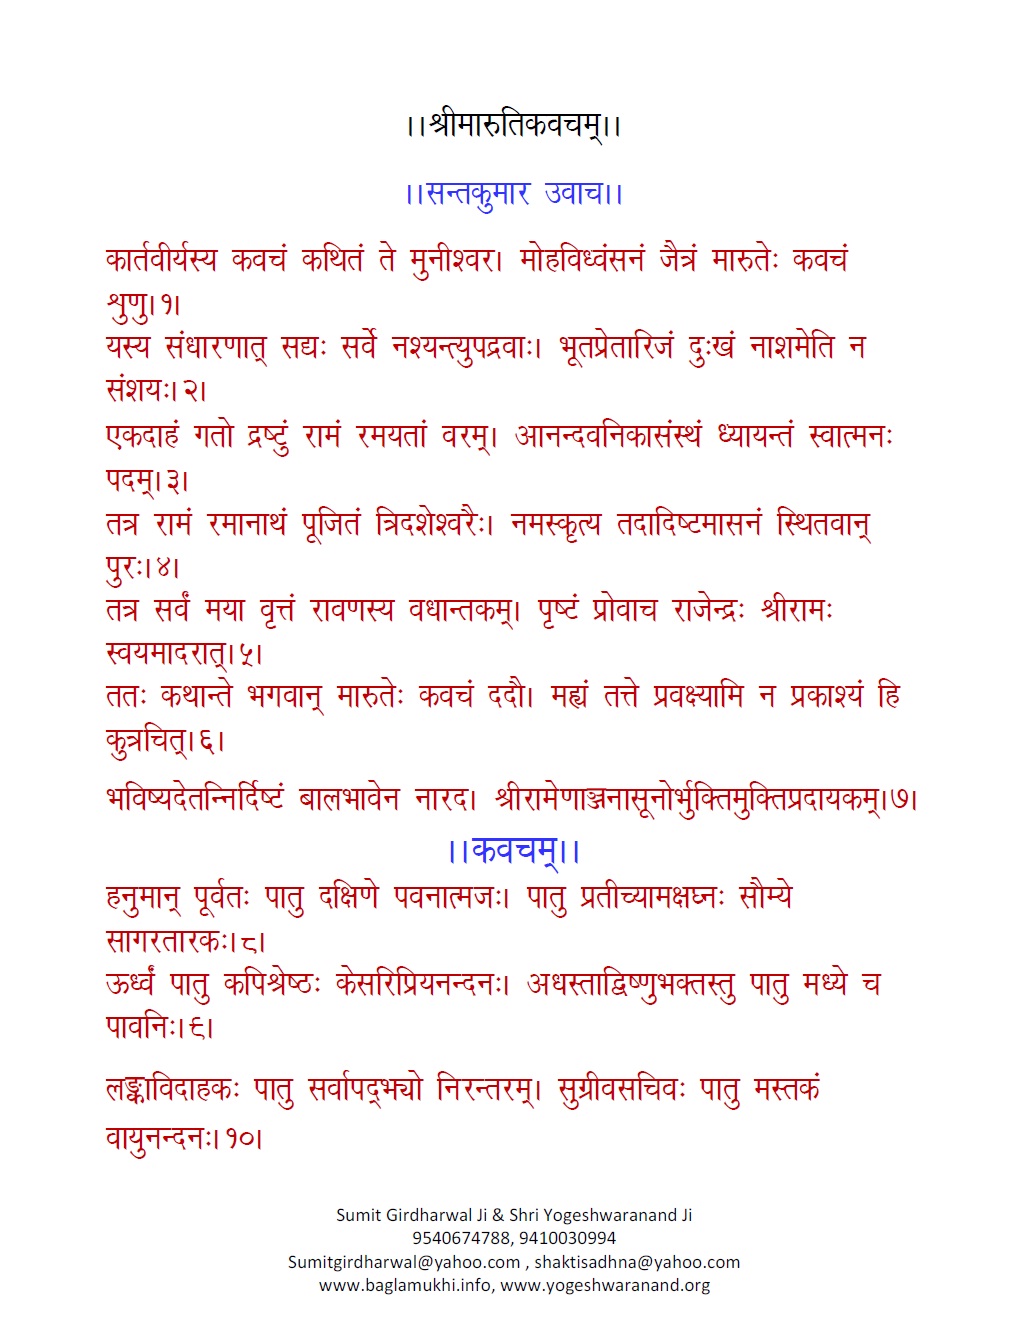 panchmukhi hanuman kavach in hindi